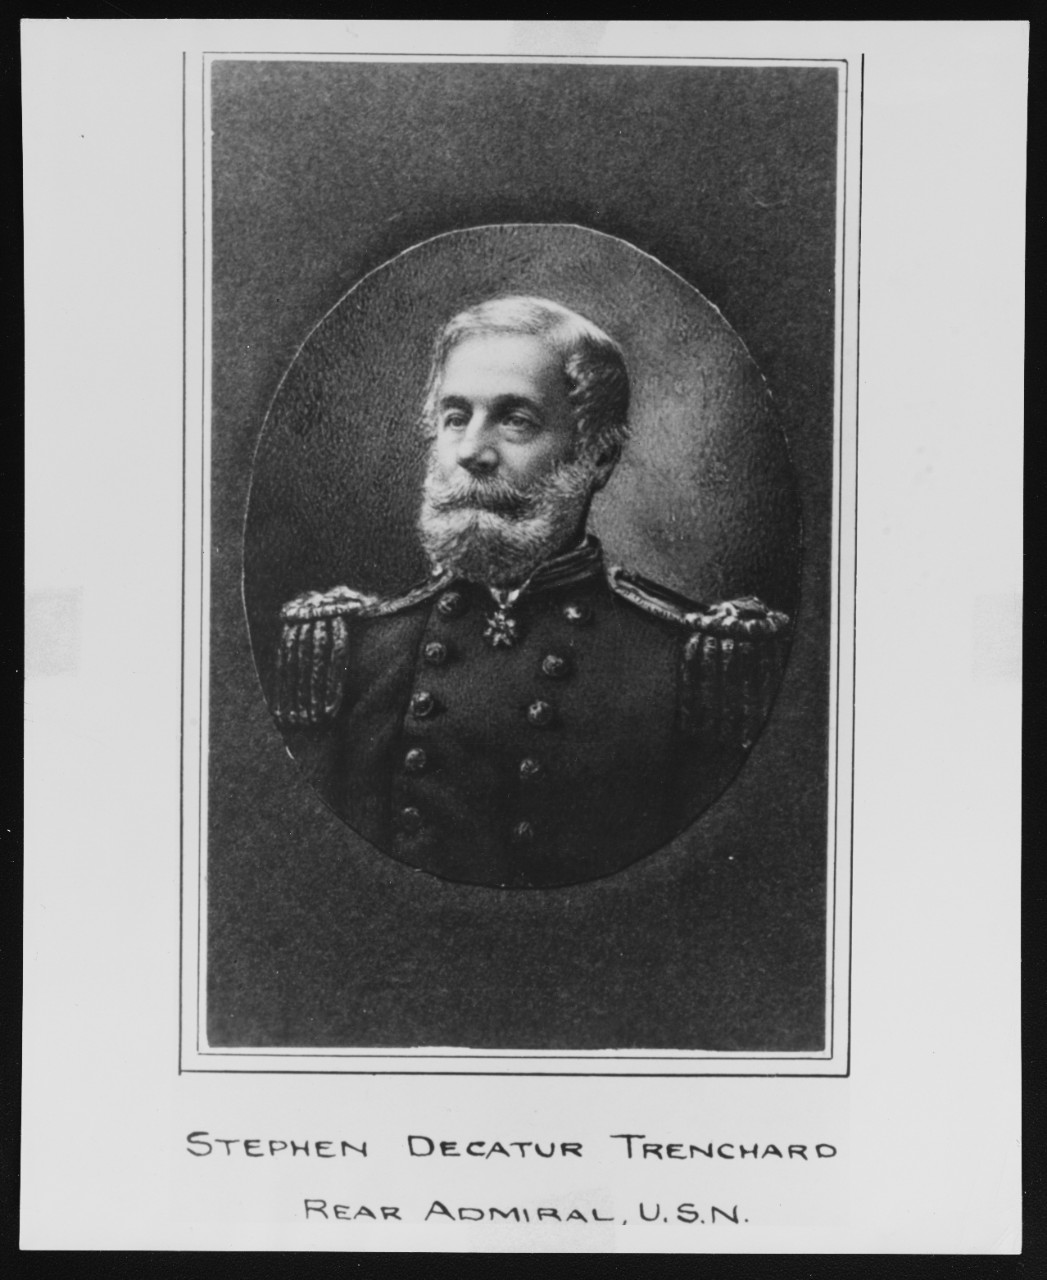 Stephen Decatur Trenchard